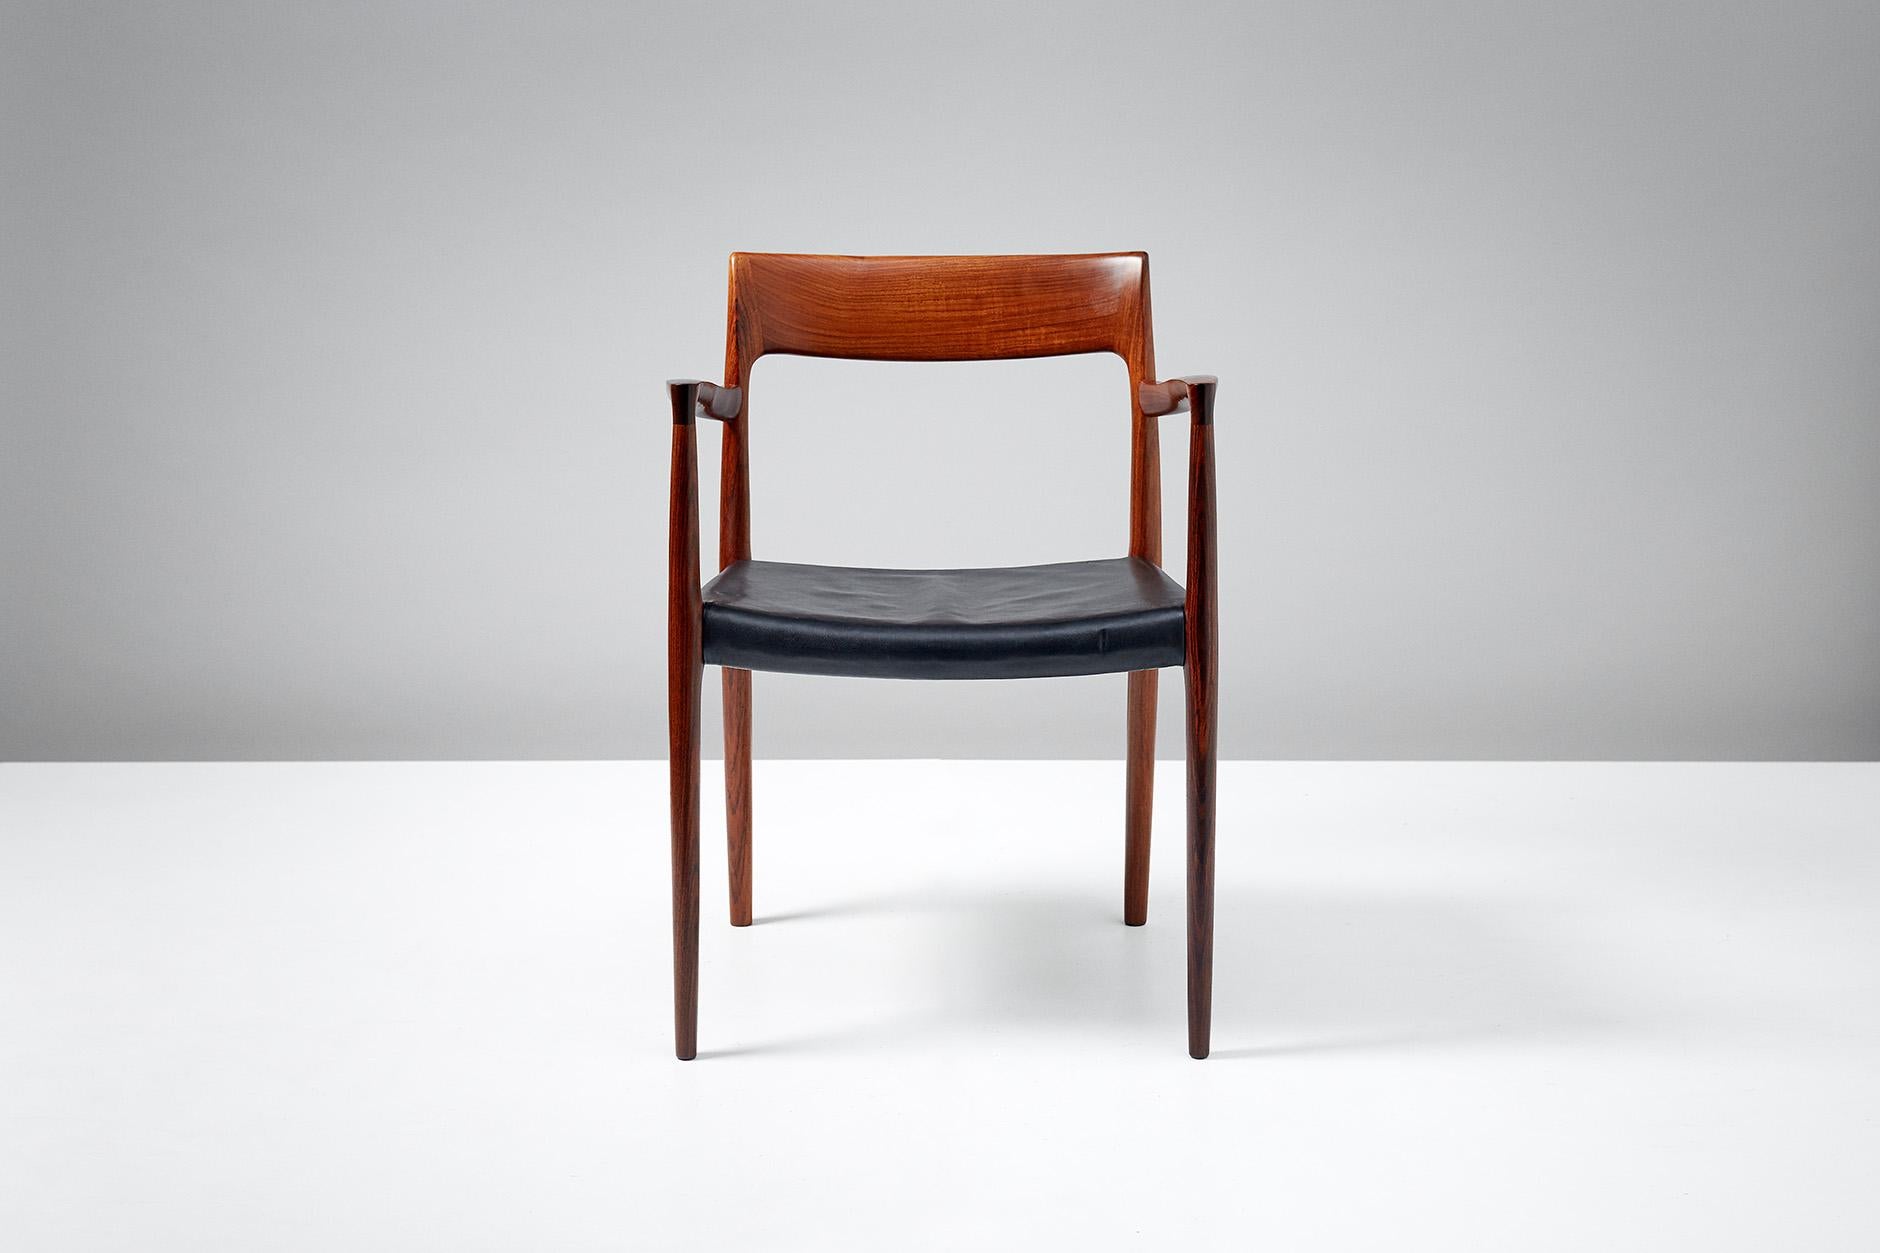 Niels O. Moller

Model 57 chair 

Solid rosewood armchair produced by J.L. Moller Mobelfabrik, Denmark, 1959. Original, patinated black leather seat.

Measures: H 77 cm / D 50 cm / W 55 cm / SH 44 cm.